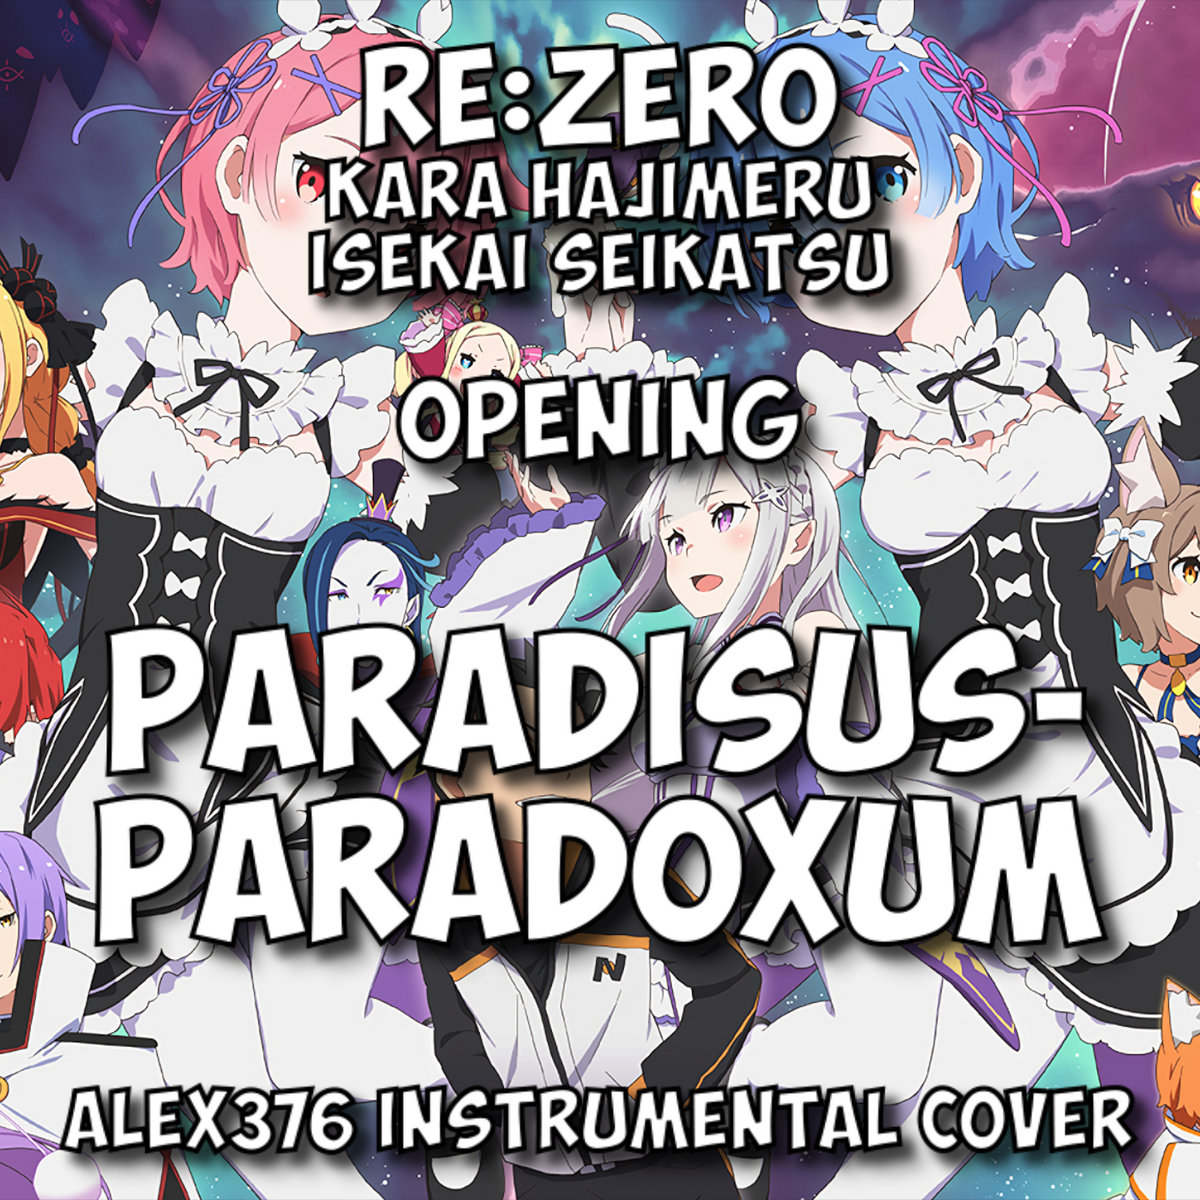 Re Zero Op2 Paradisus Paradoxum Alex376 Instrumental Cover Alex376